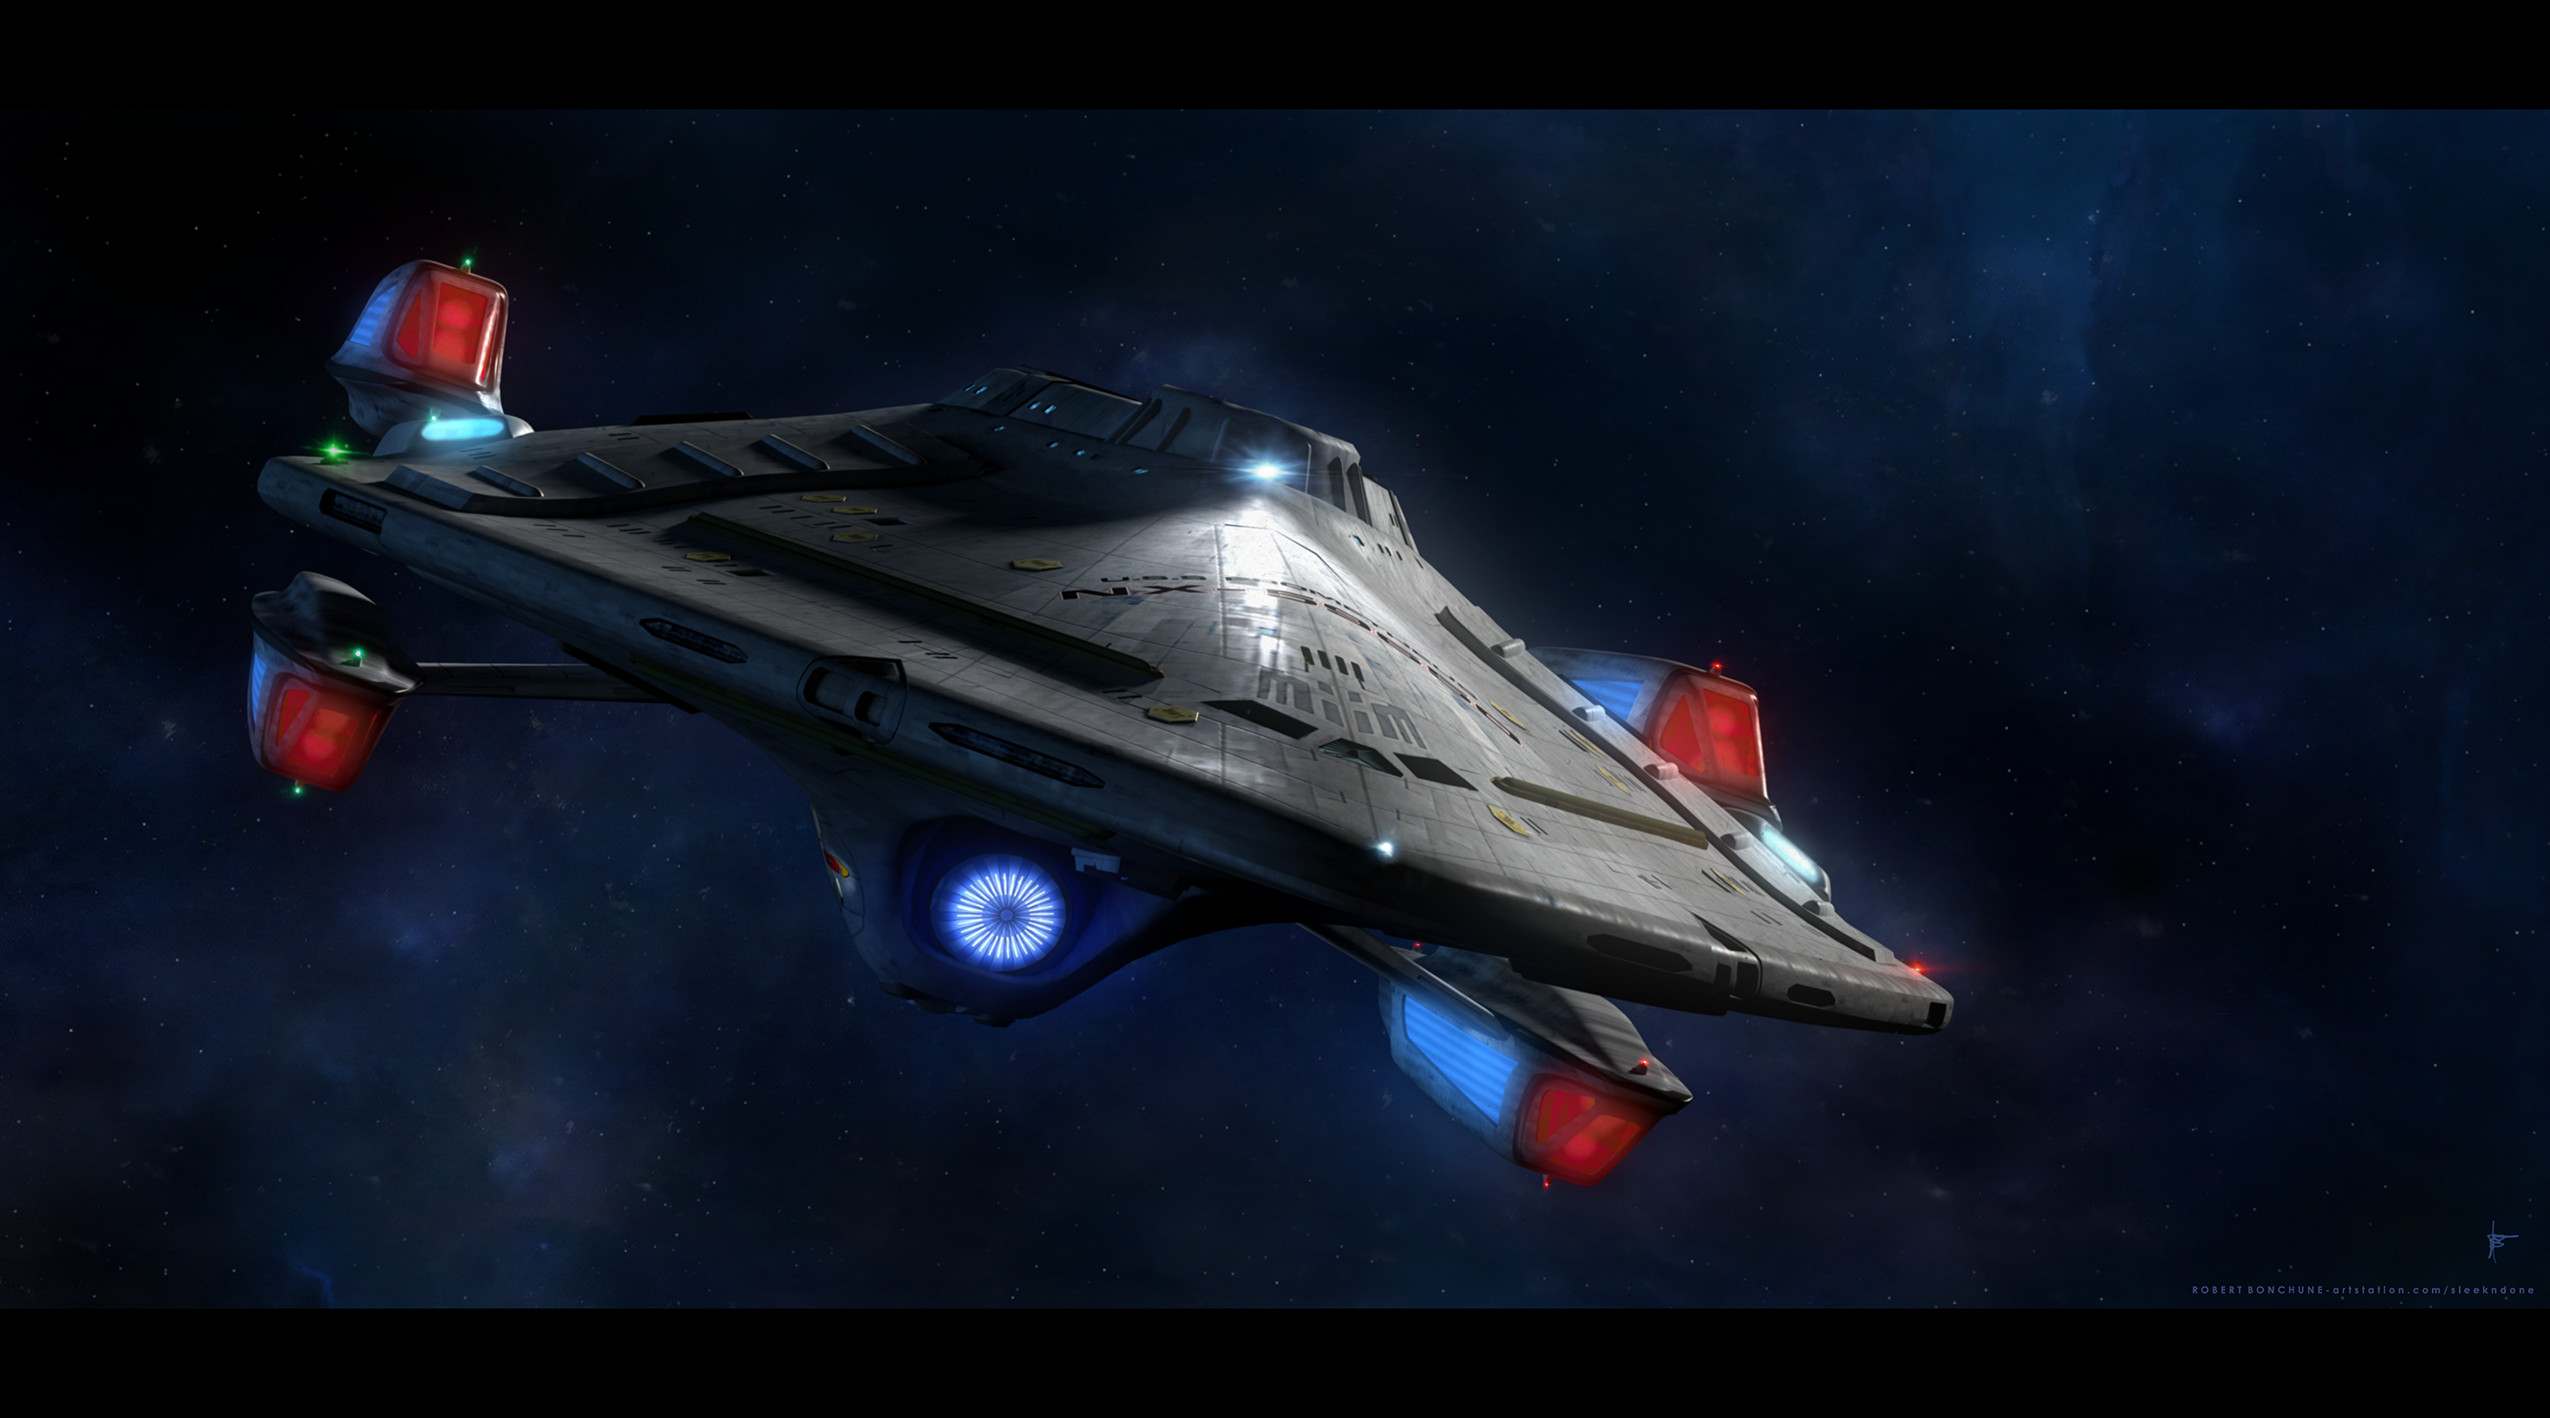 General 2550x1418 Star Trek spaceship CGI USS Prometheus Star Trek Ships vehicle science fiction digital art